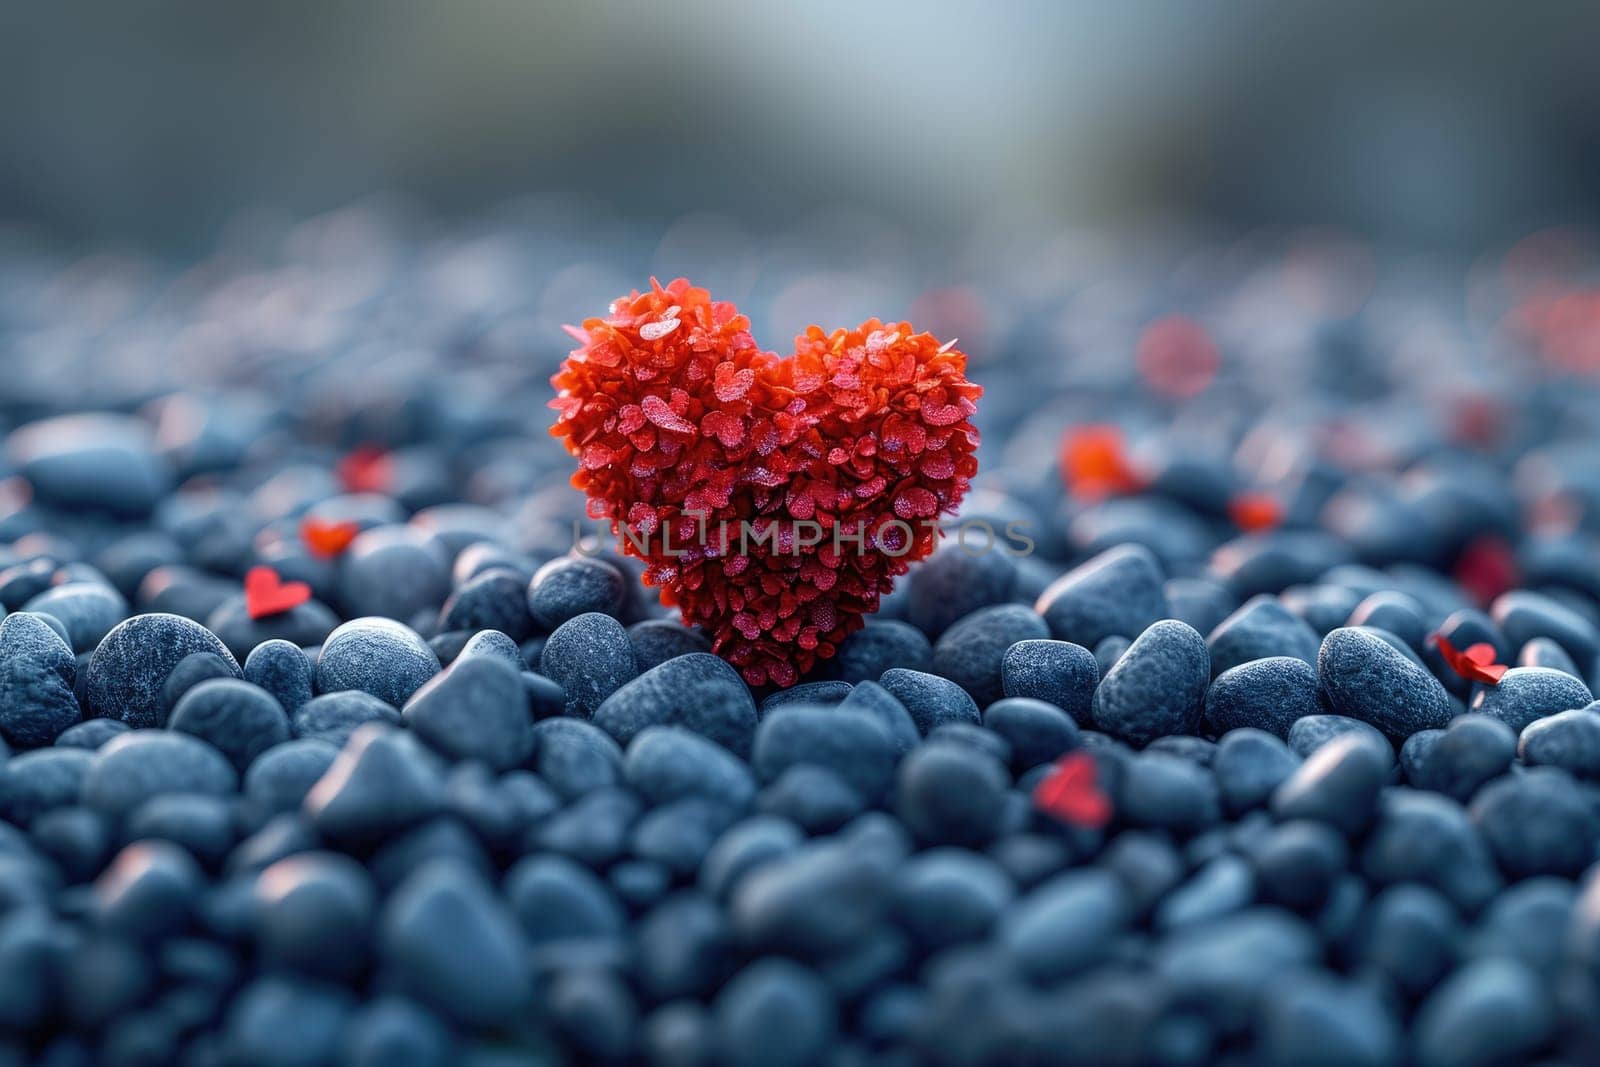 A healthy heart of love pragma by biancoblue